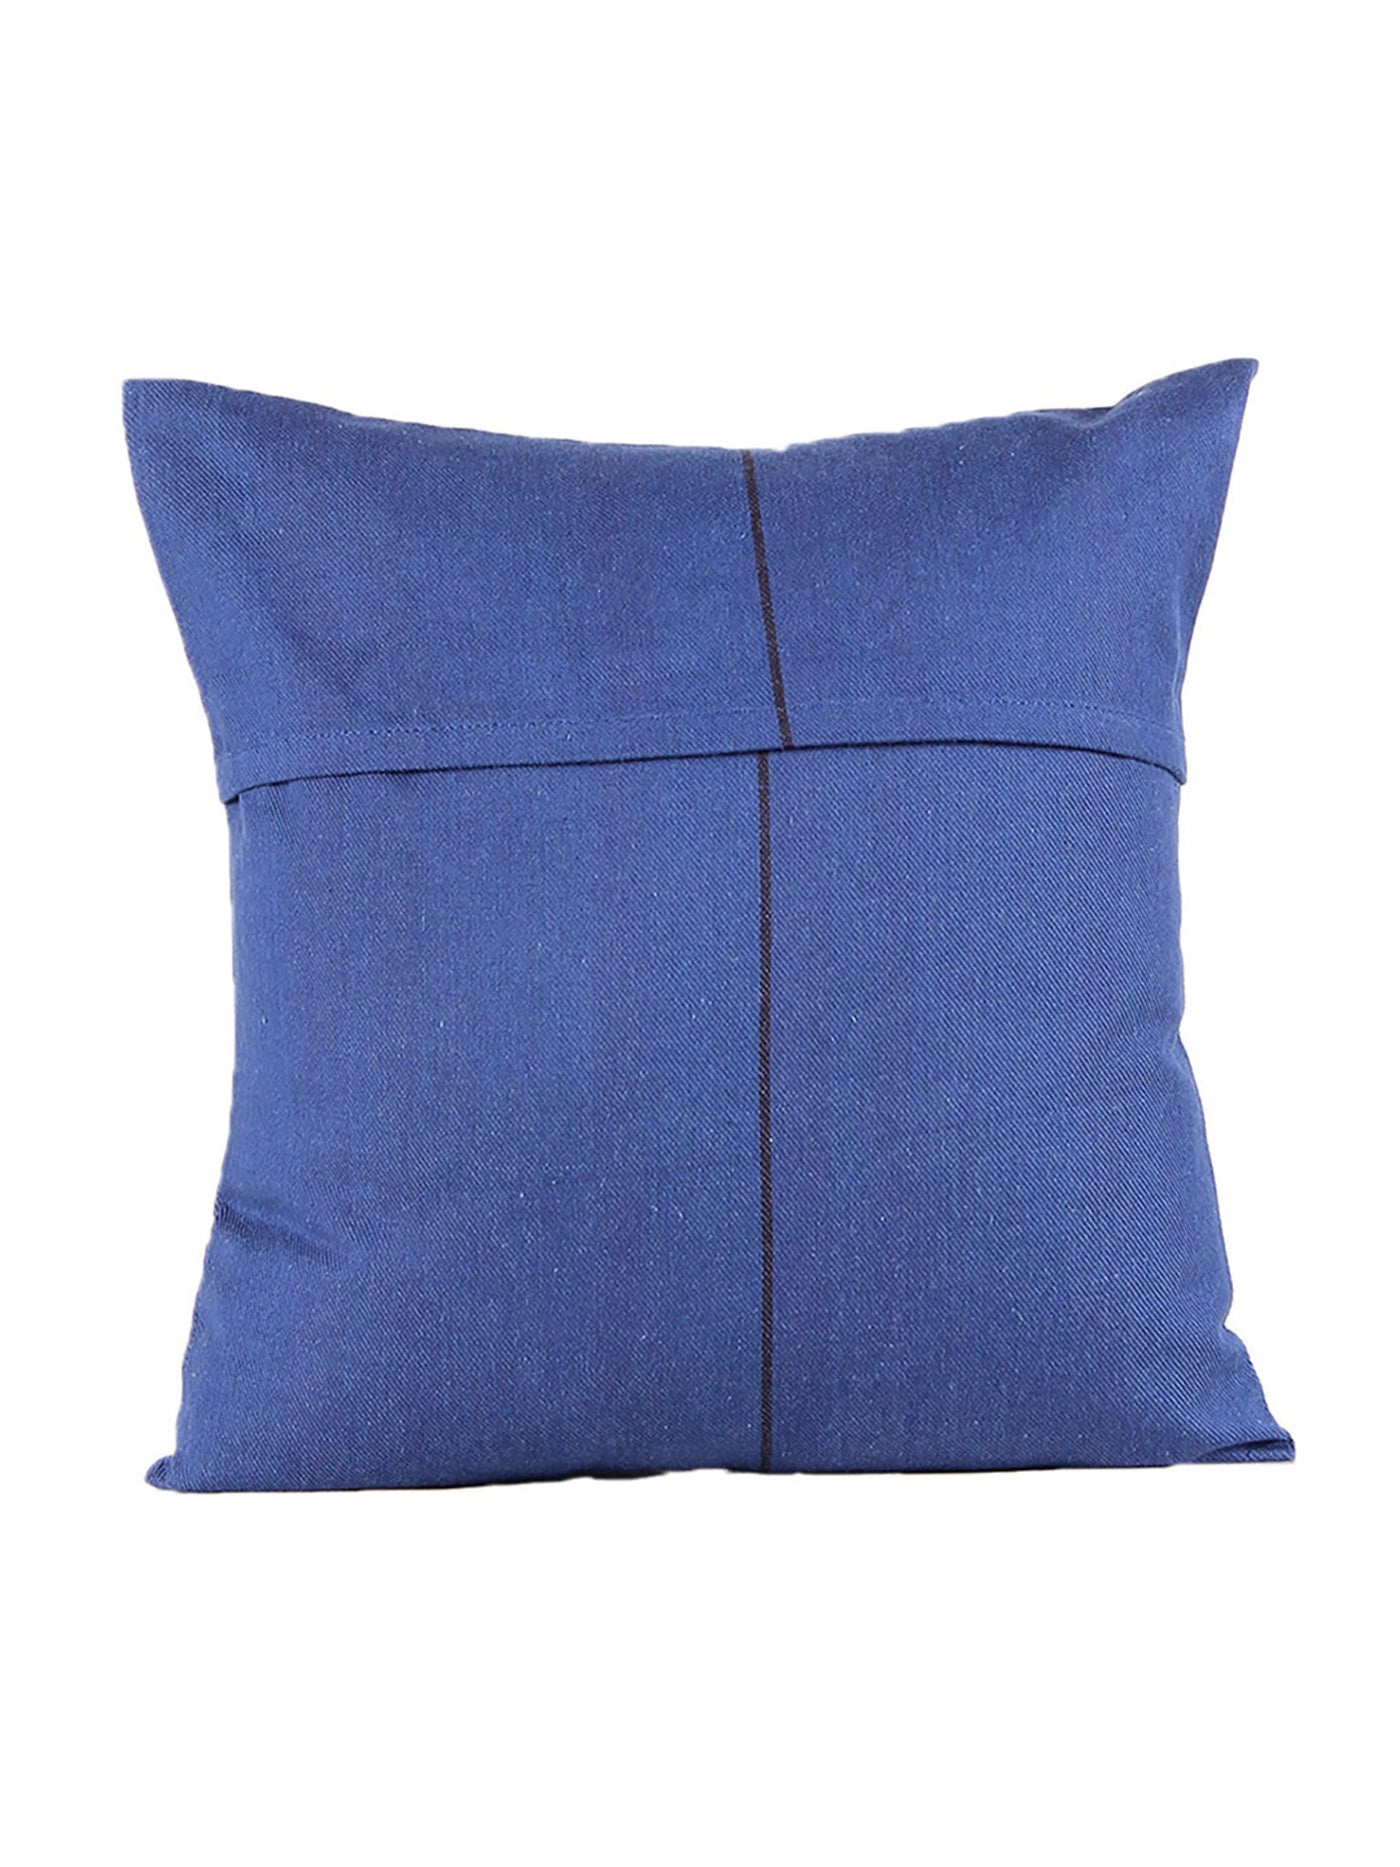 Cushion Cover - Tana Bana (Blue)